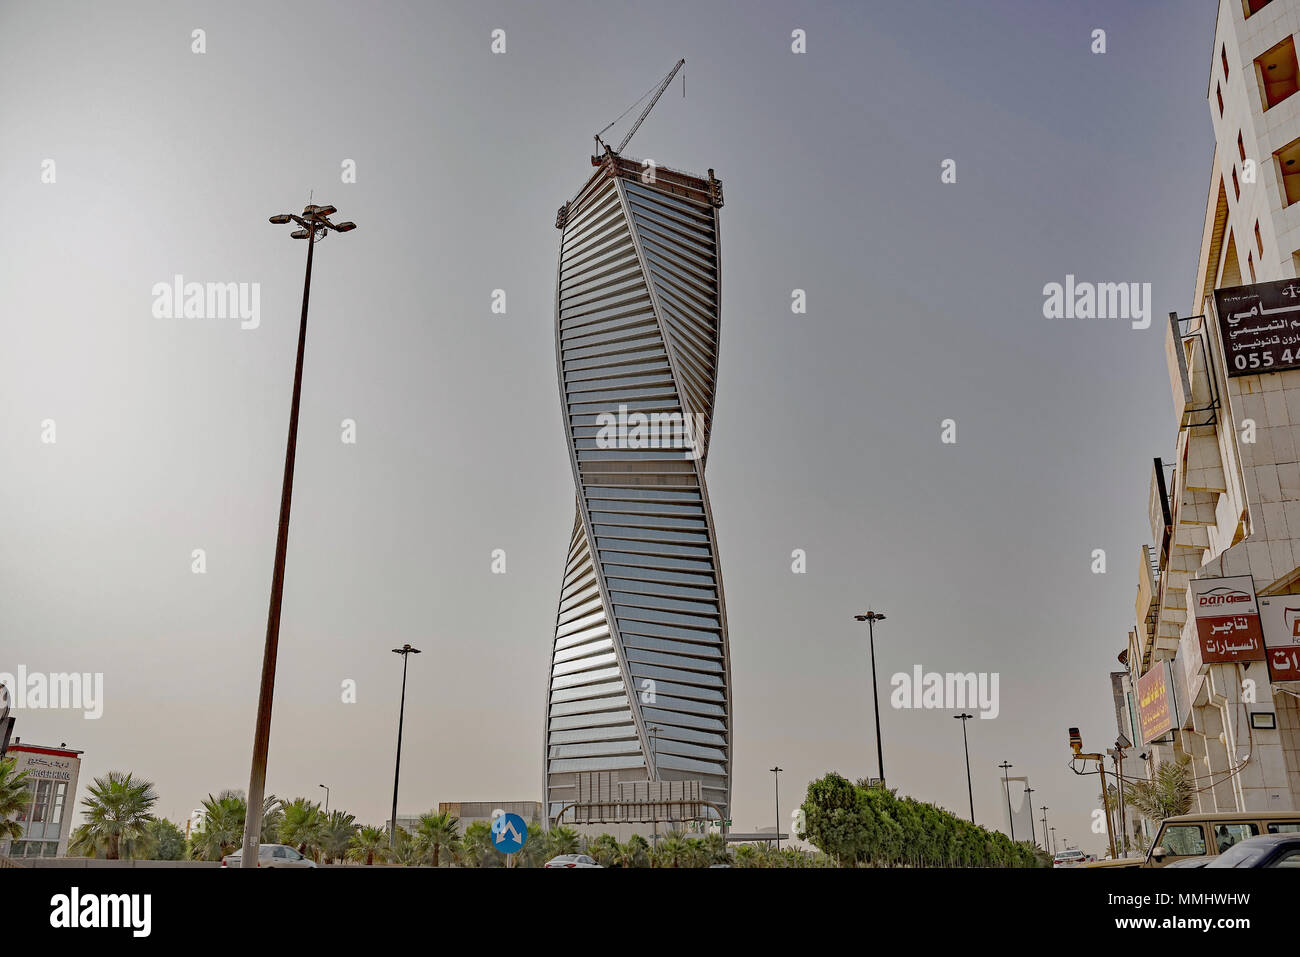 Gratte-ciel le long de l'avenue King Fahad road, Riyadh, Arabie saoudite. Banque D'Images